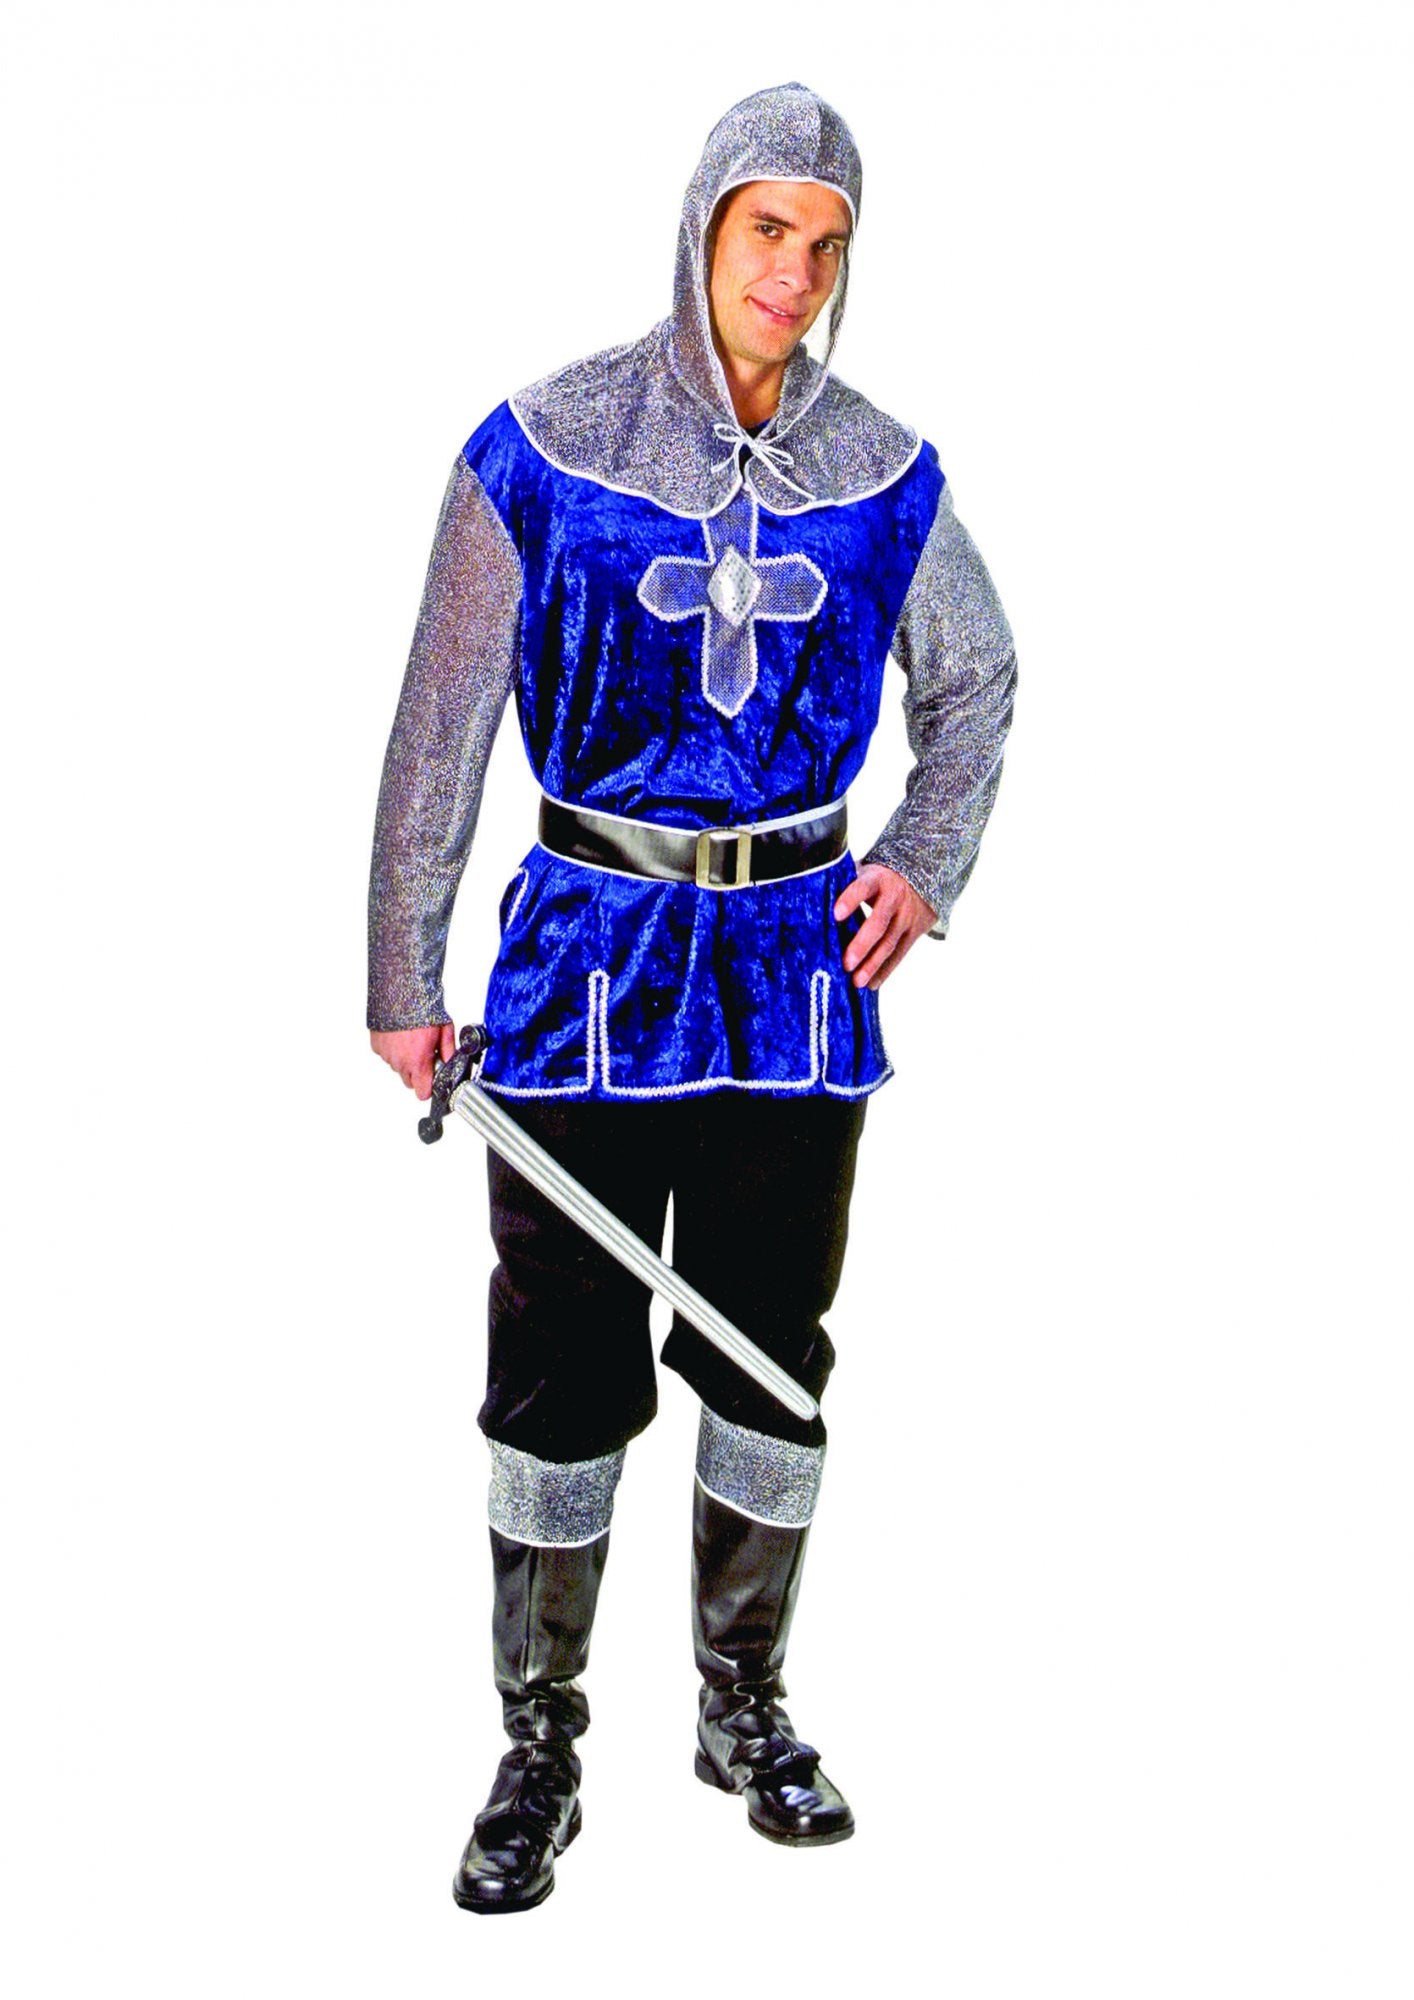 Costume Uomo Lancillotto Medievale Tg 52a54